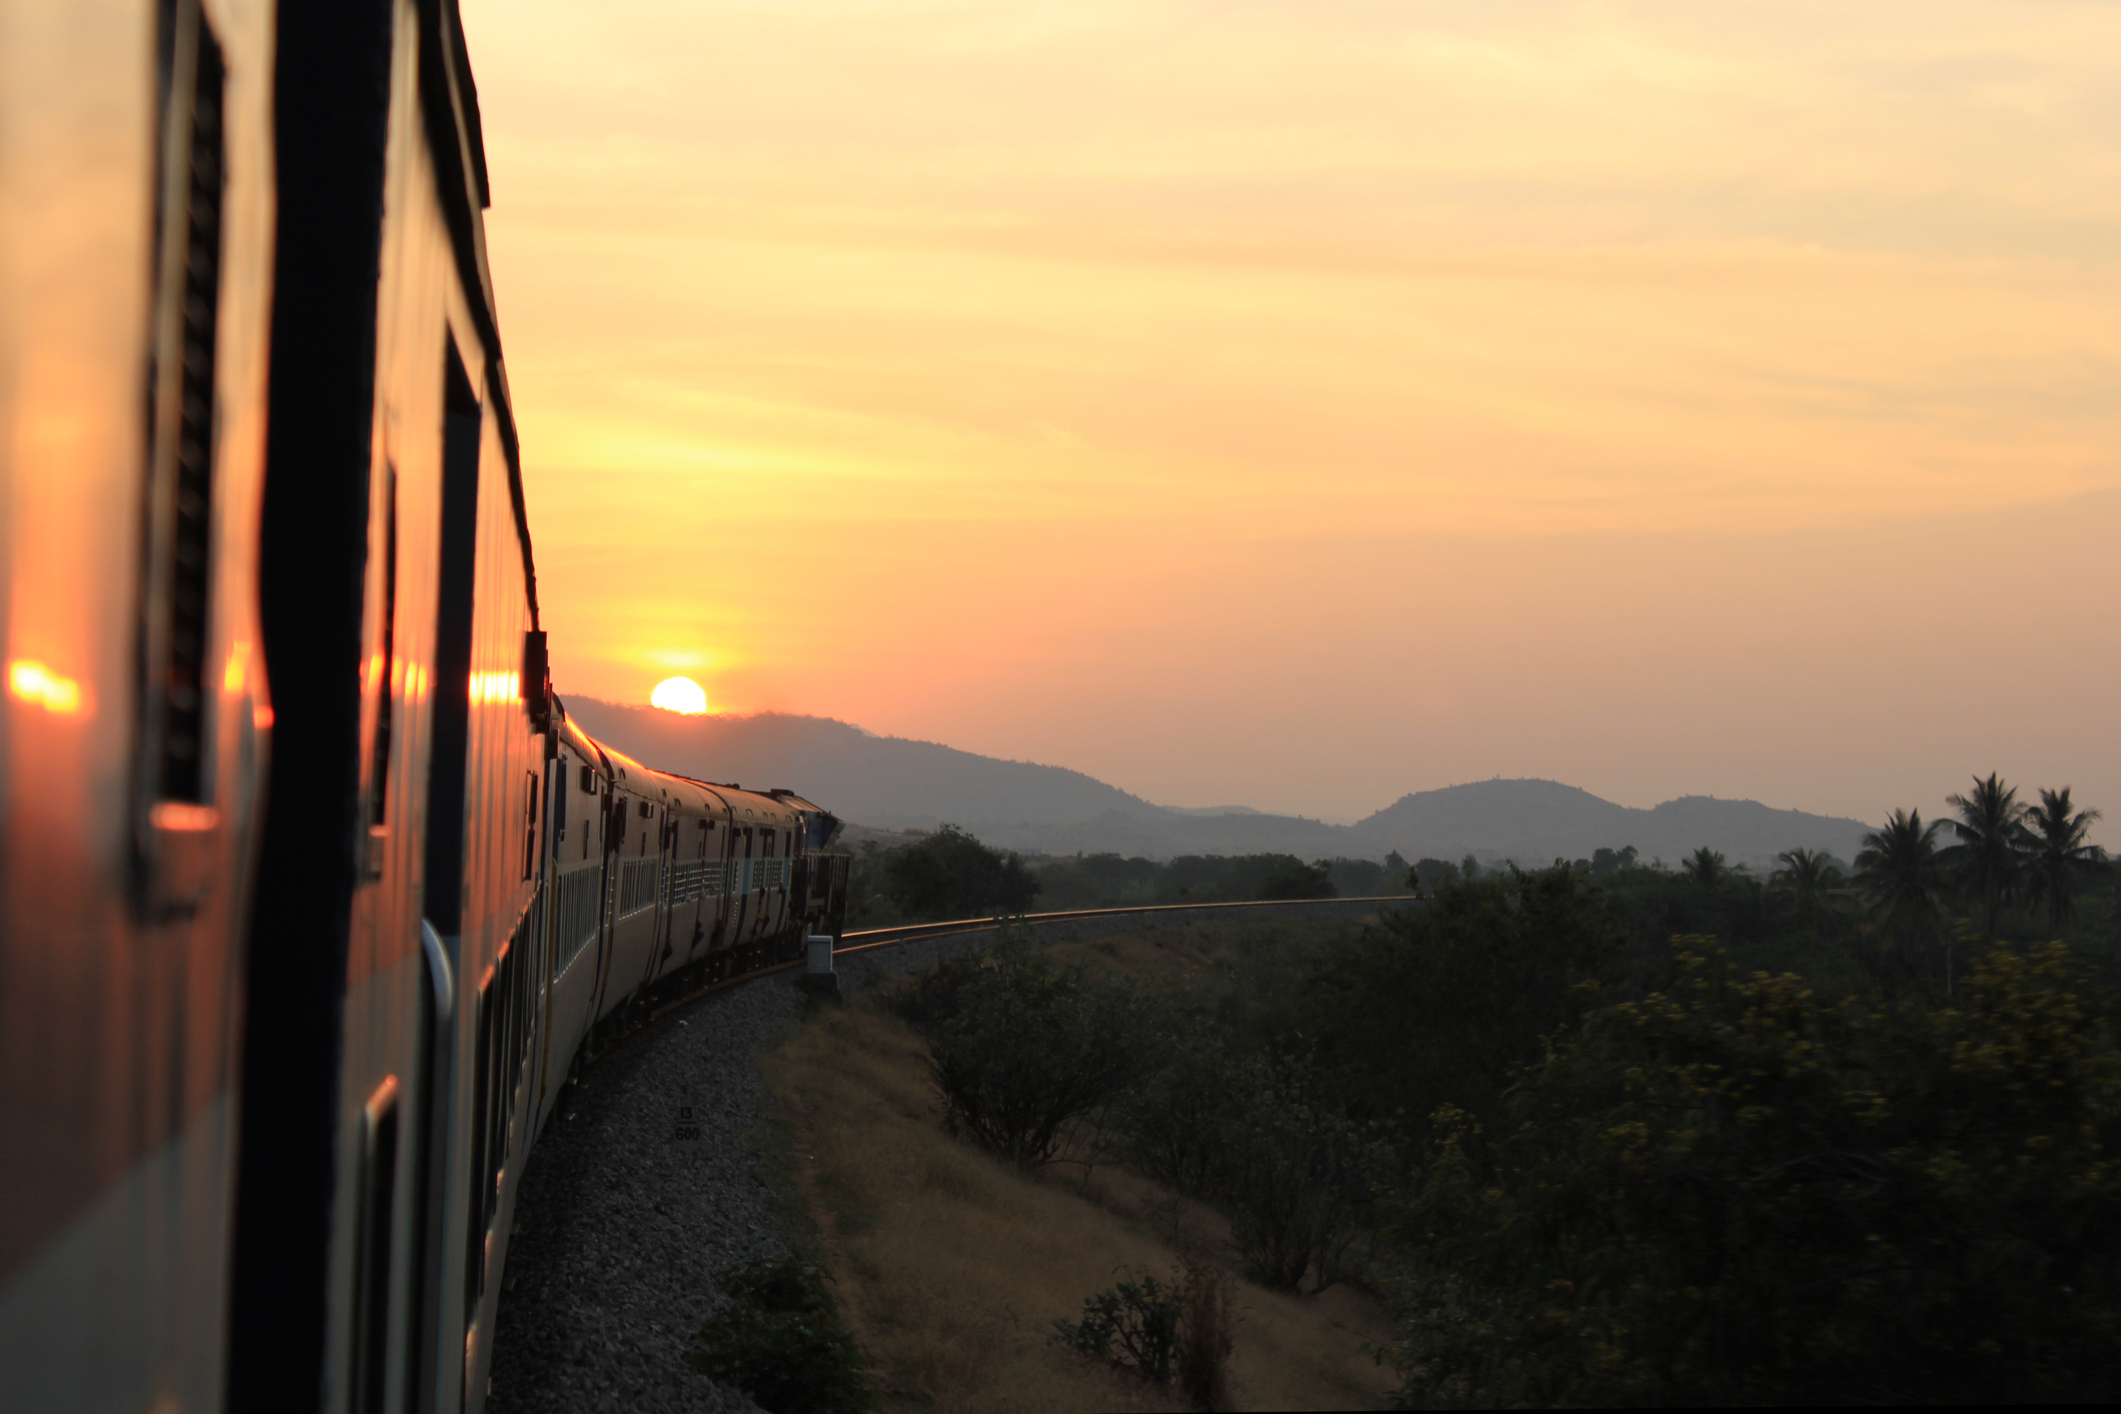 Train journey in India